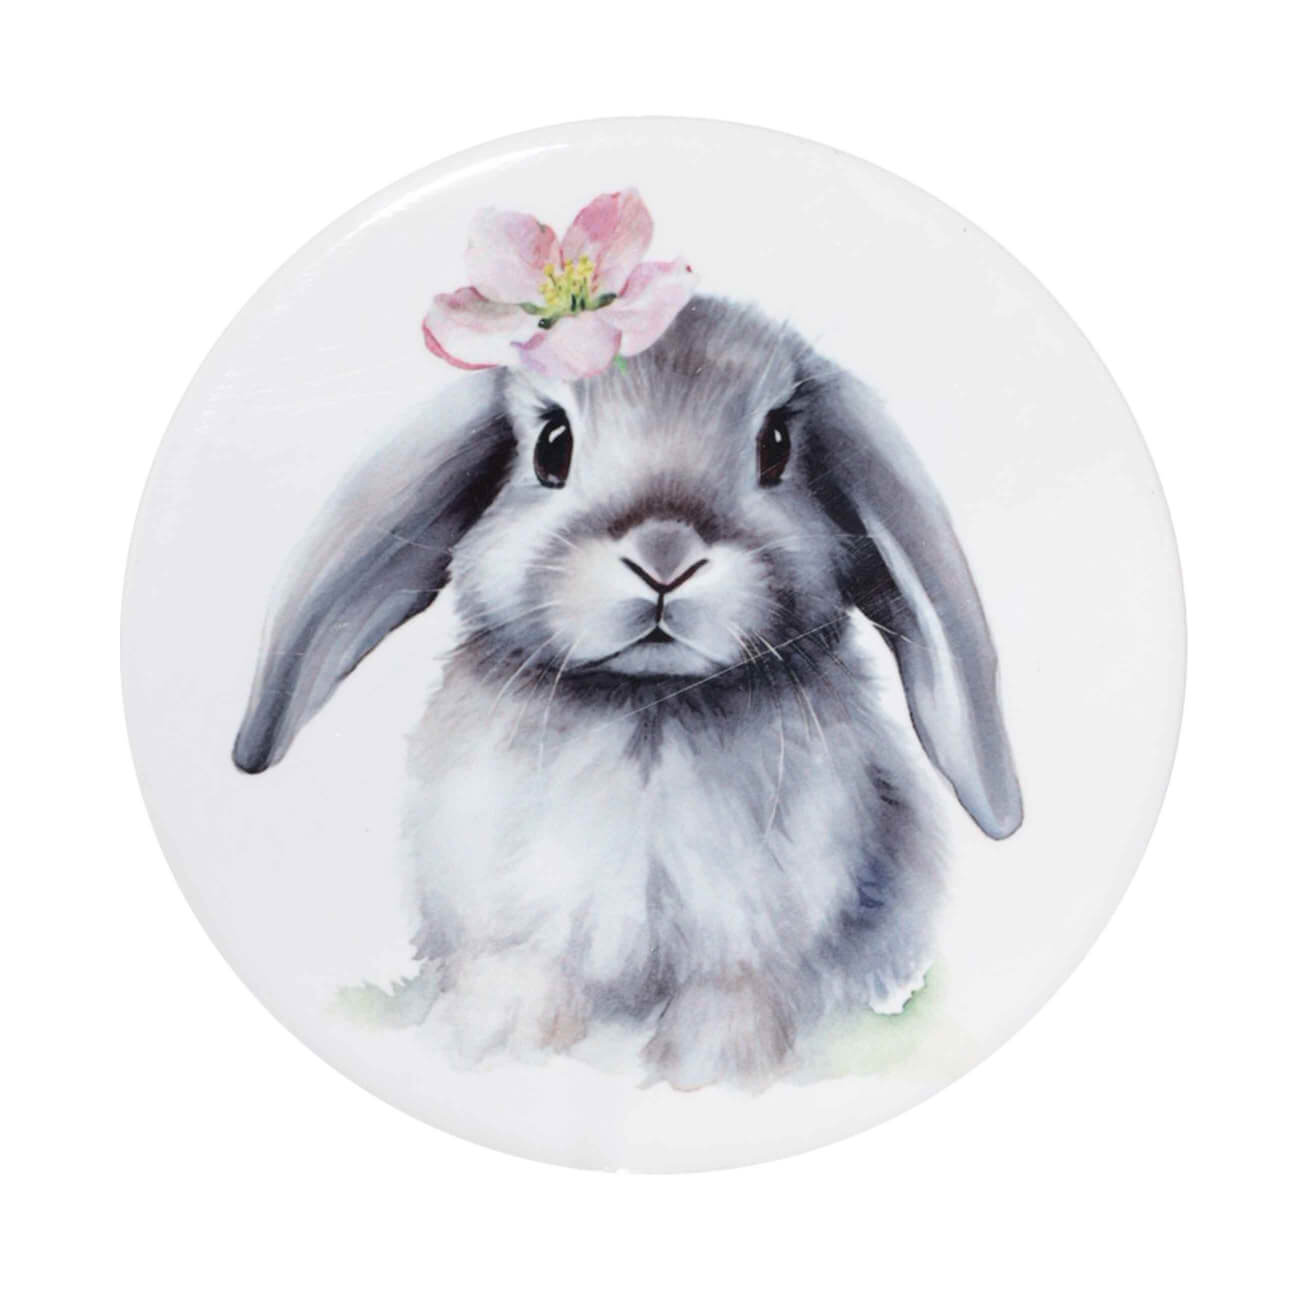 подставка под горячее 14x28 см керамика пробка бежевая кролик в венке pure easter Подставка под кружку, 11 см, керамика/пробка, круглая, белая, Кролик с цветком, Pure Easter